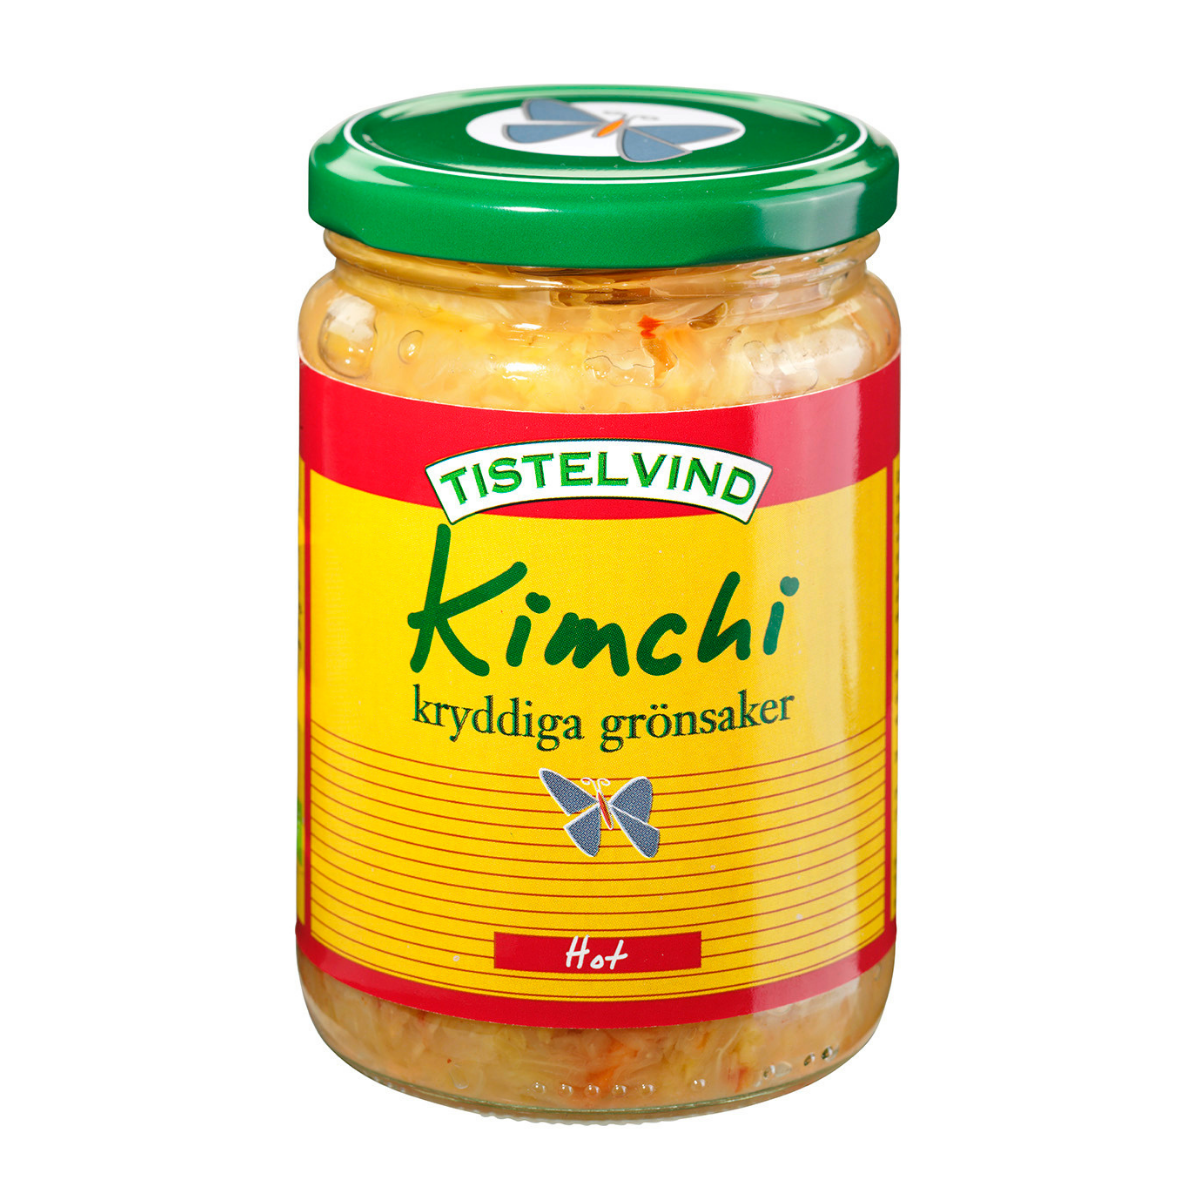 Tistelvind's Kimchi hot '